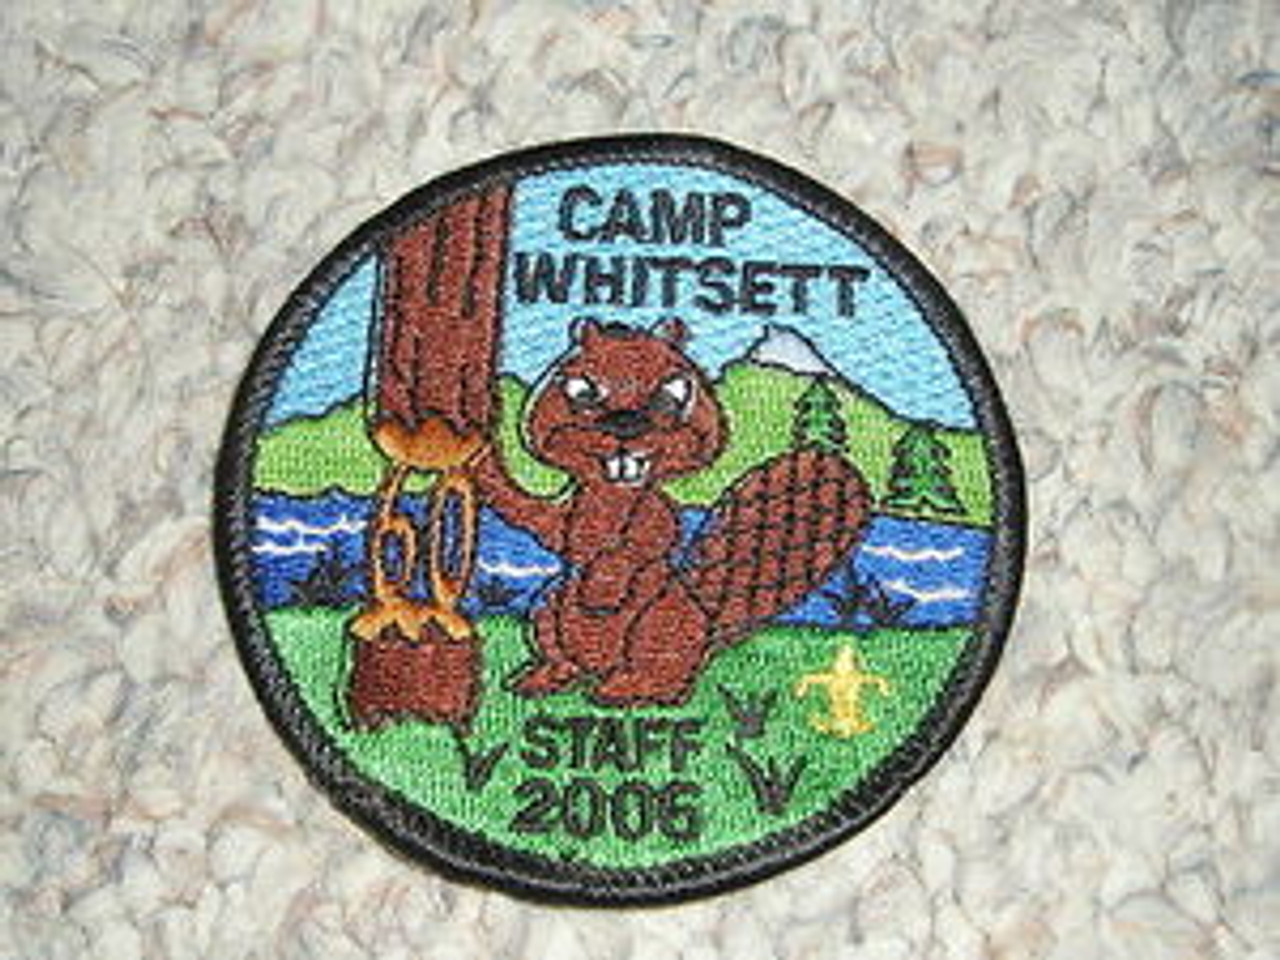 2006 Camp Whitsett STAFF Patch - 60th Anniversary